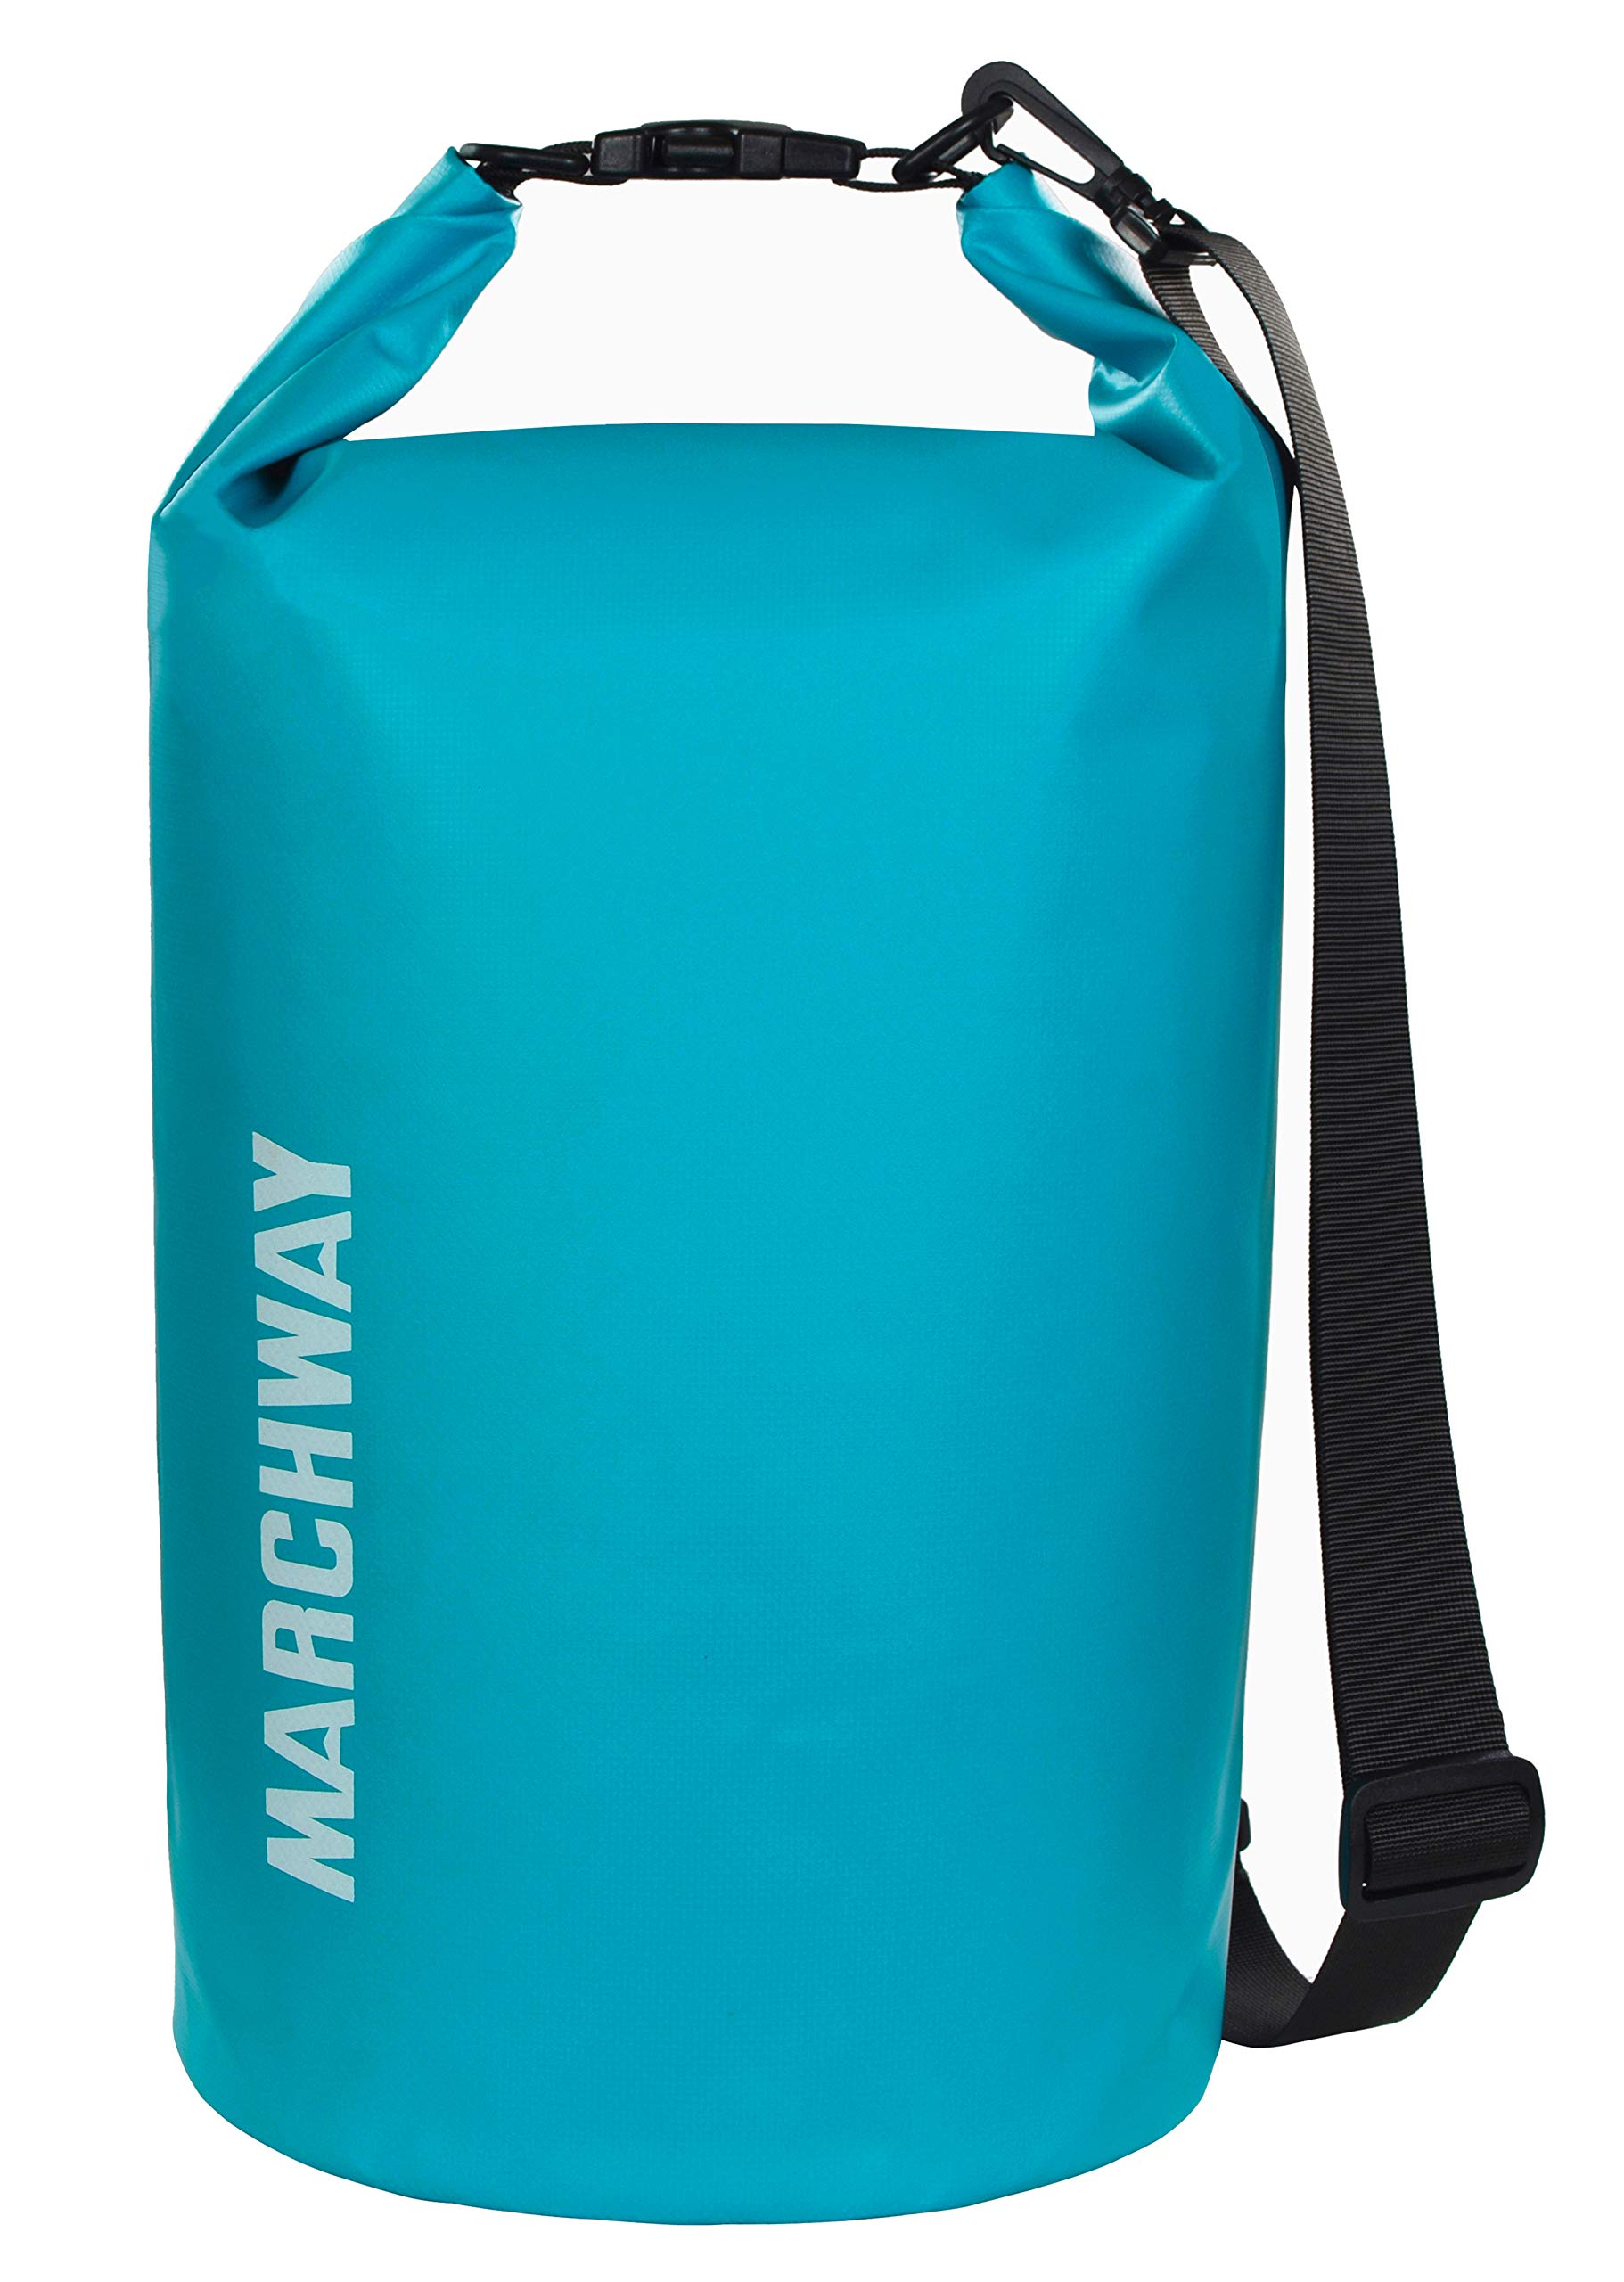 FEIWOOD GEAR Dry Bag Backpack